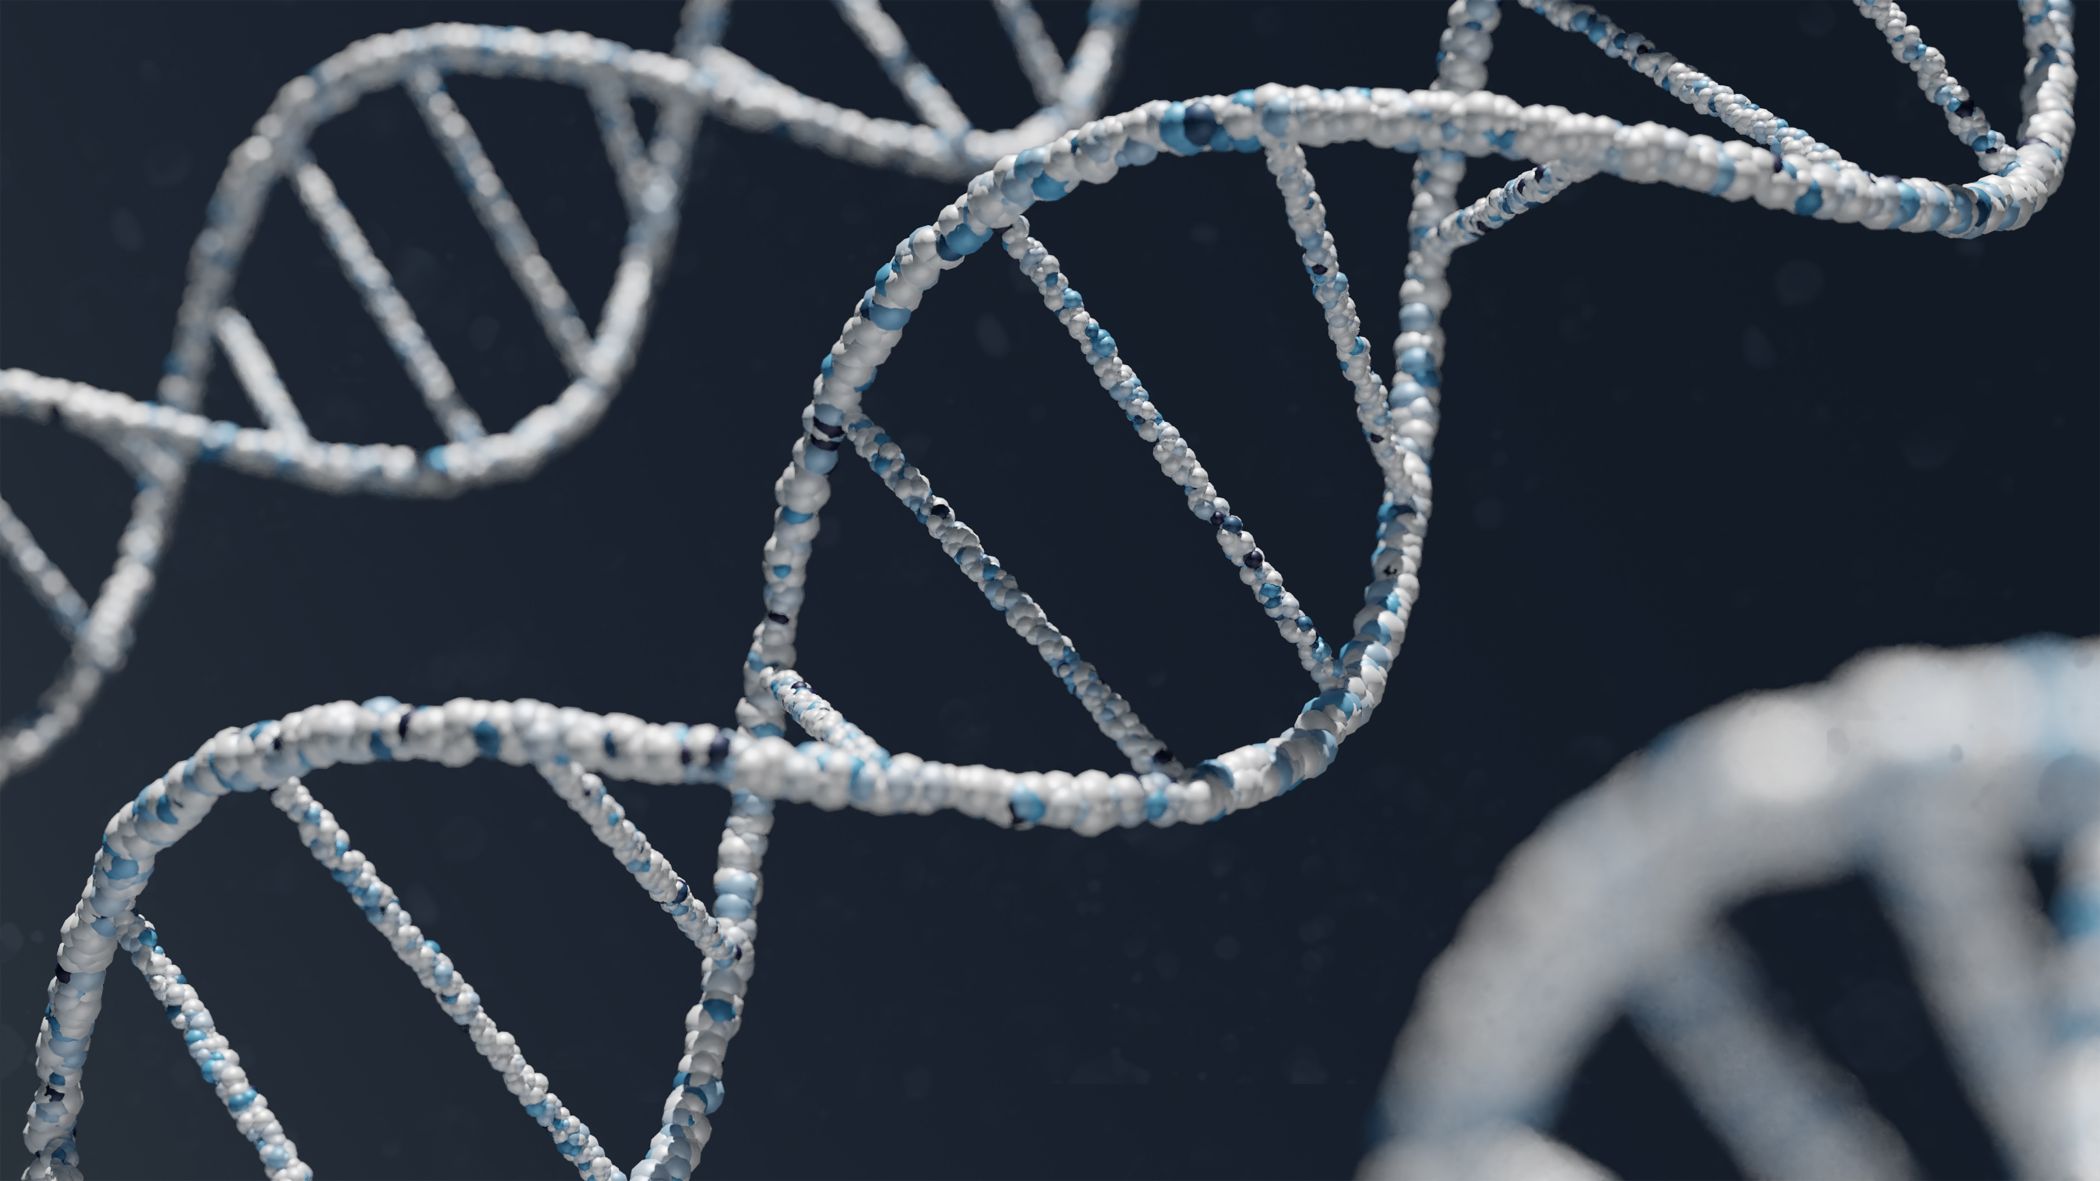 Democratizing genomic sequencing